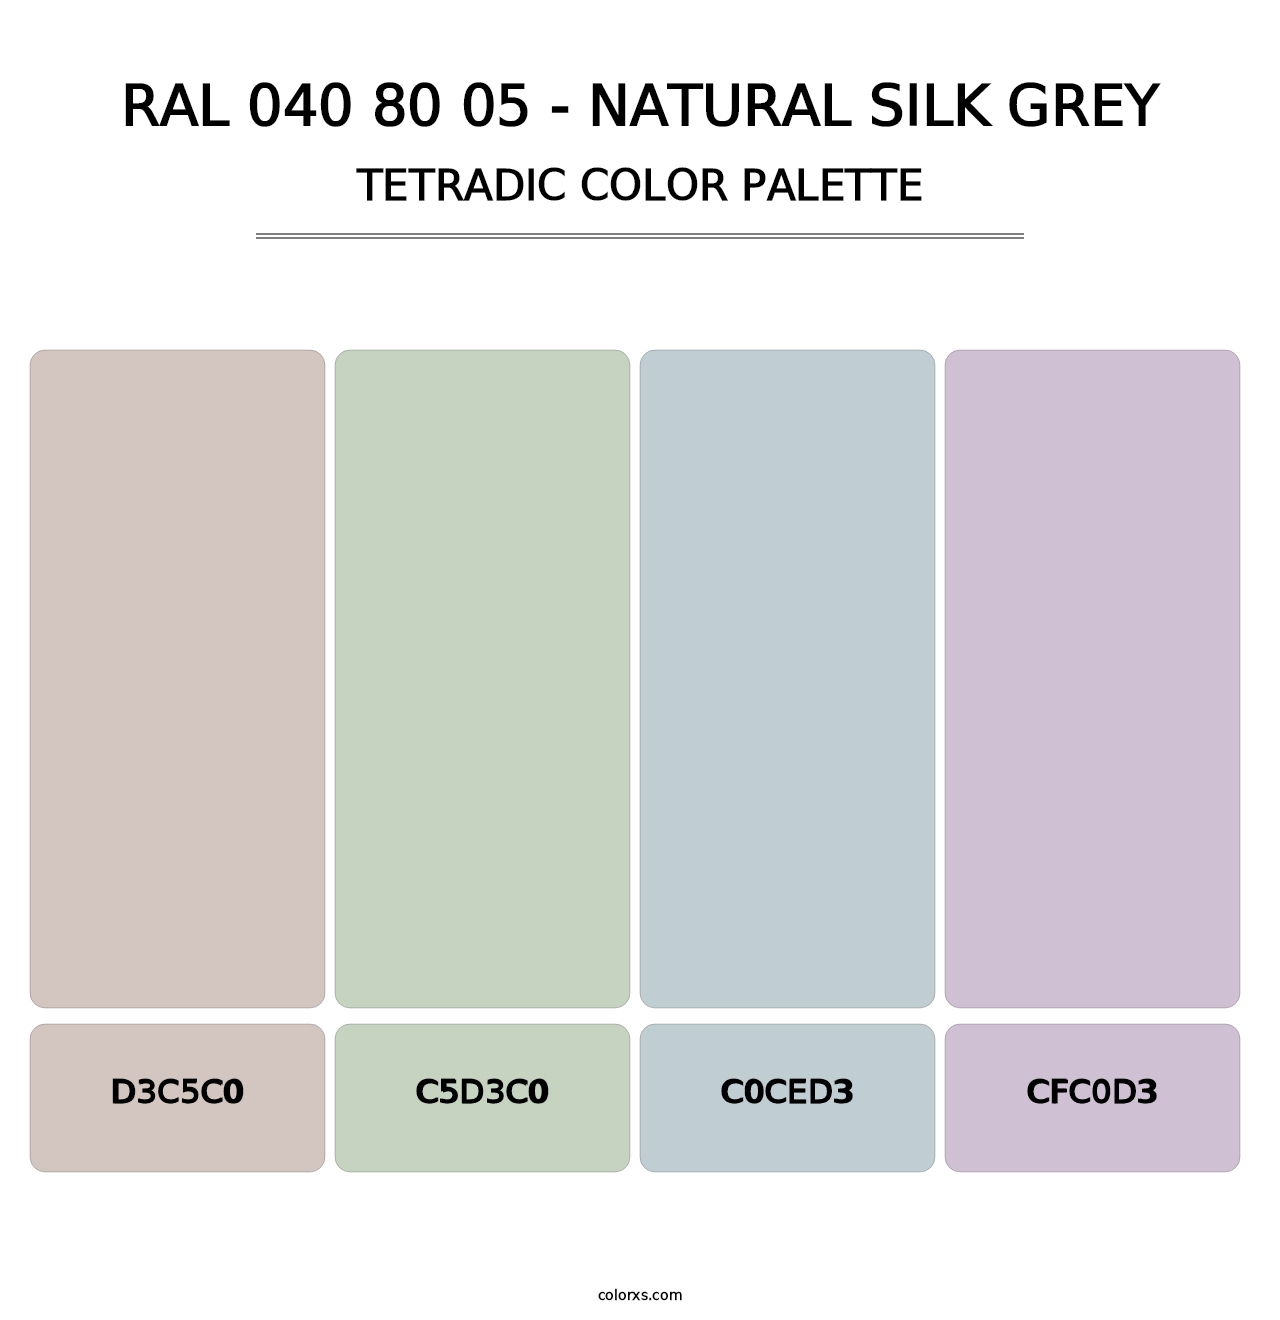 RAL 040 80 05 - Natural Silk Grey - Tetradic Color Palette